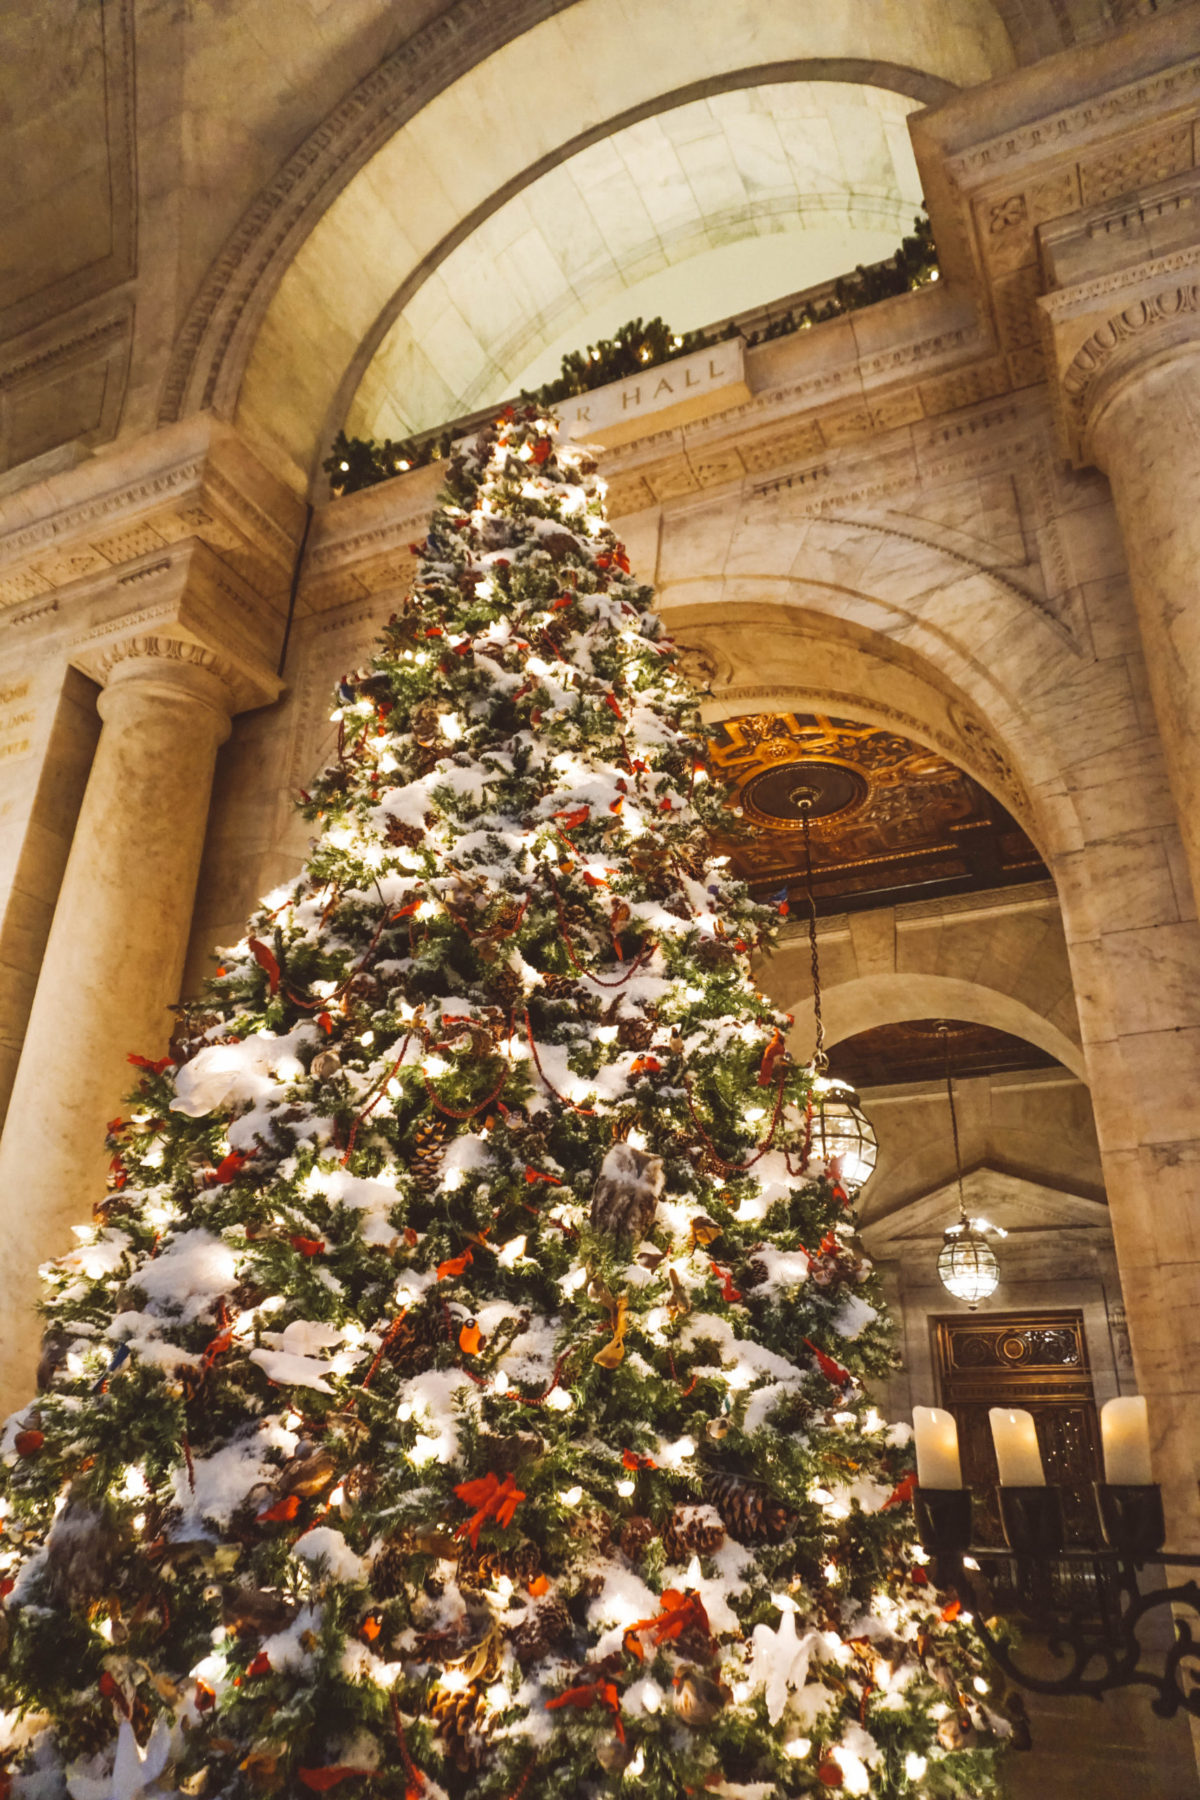 Lit Christmas Tree inside NYPL.